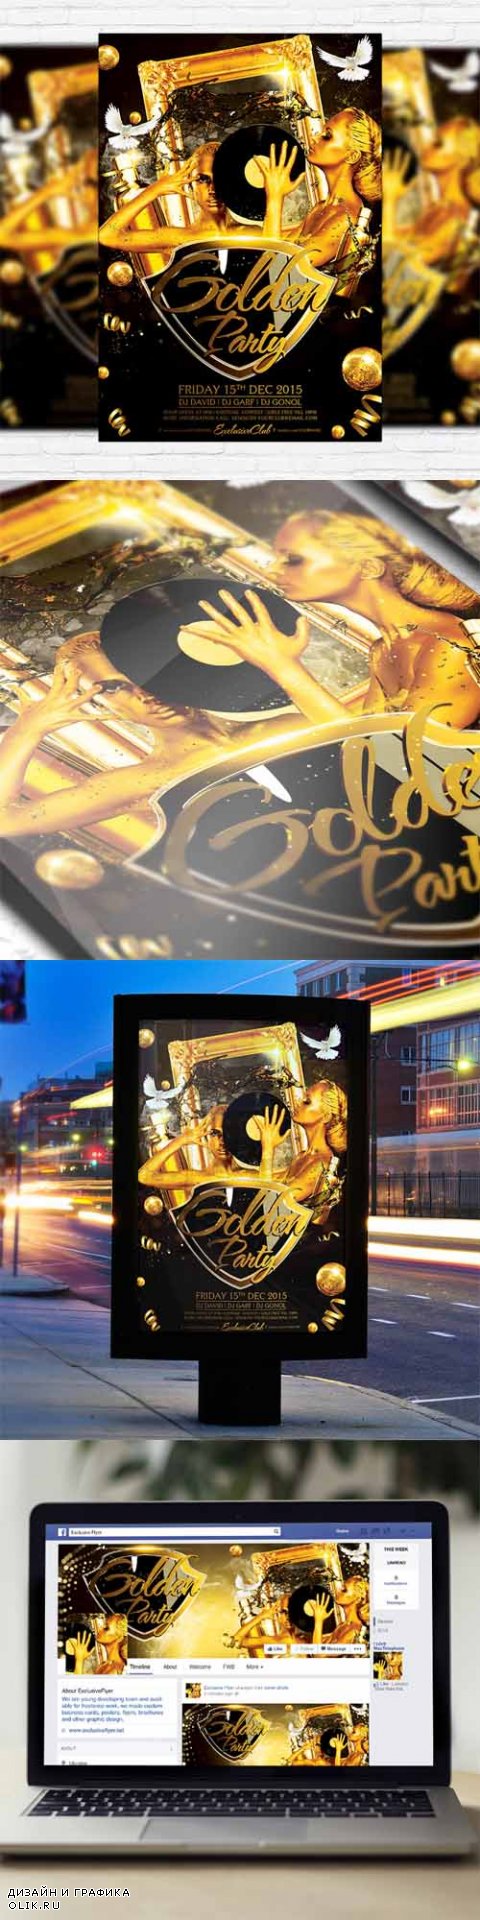 Flyer Template - Golden Party + Facebook Cover